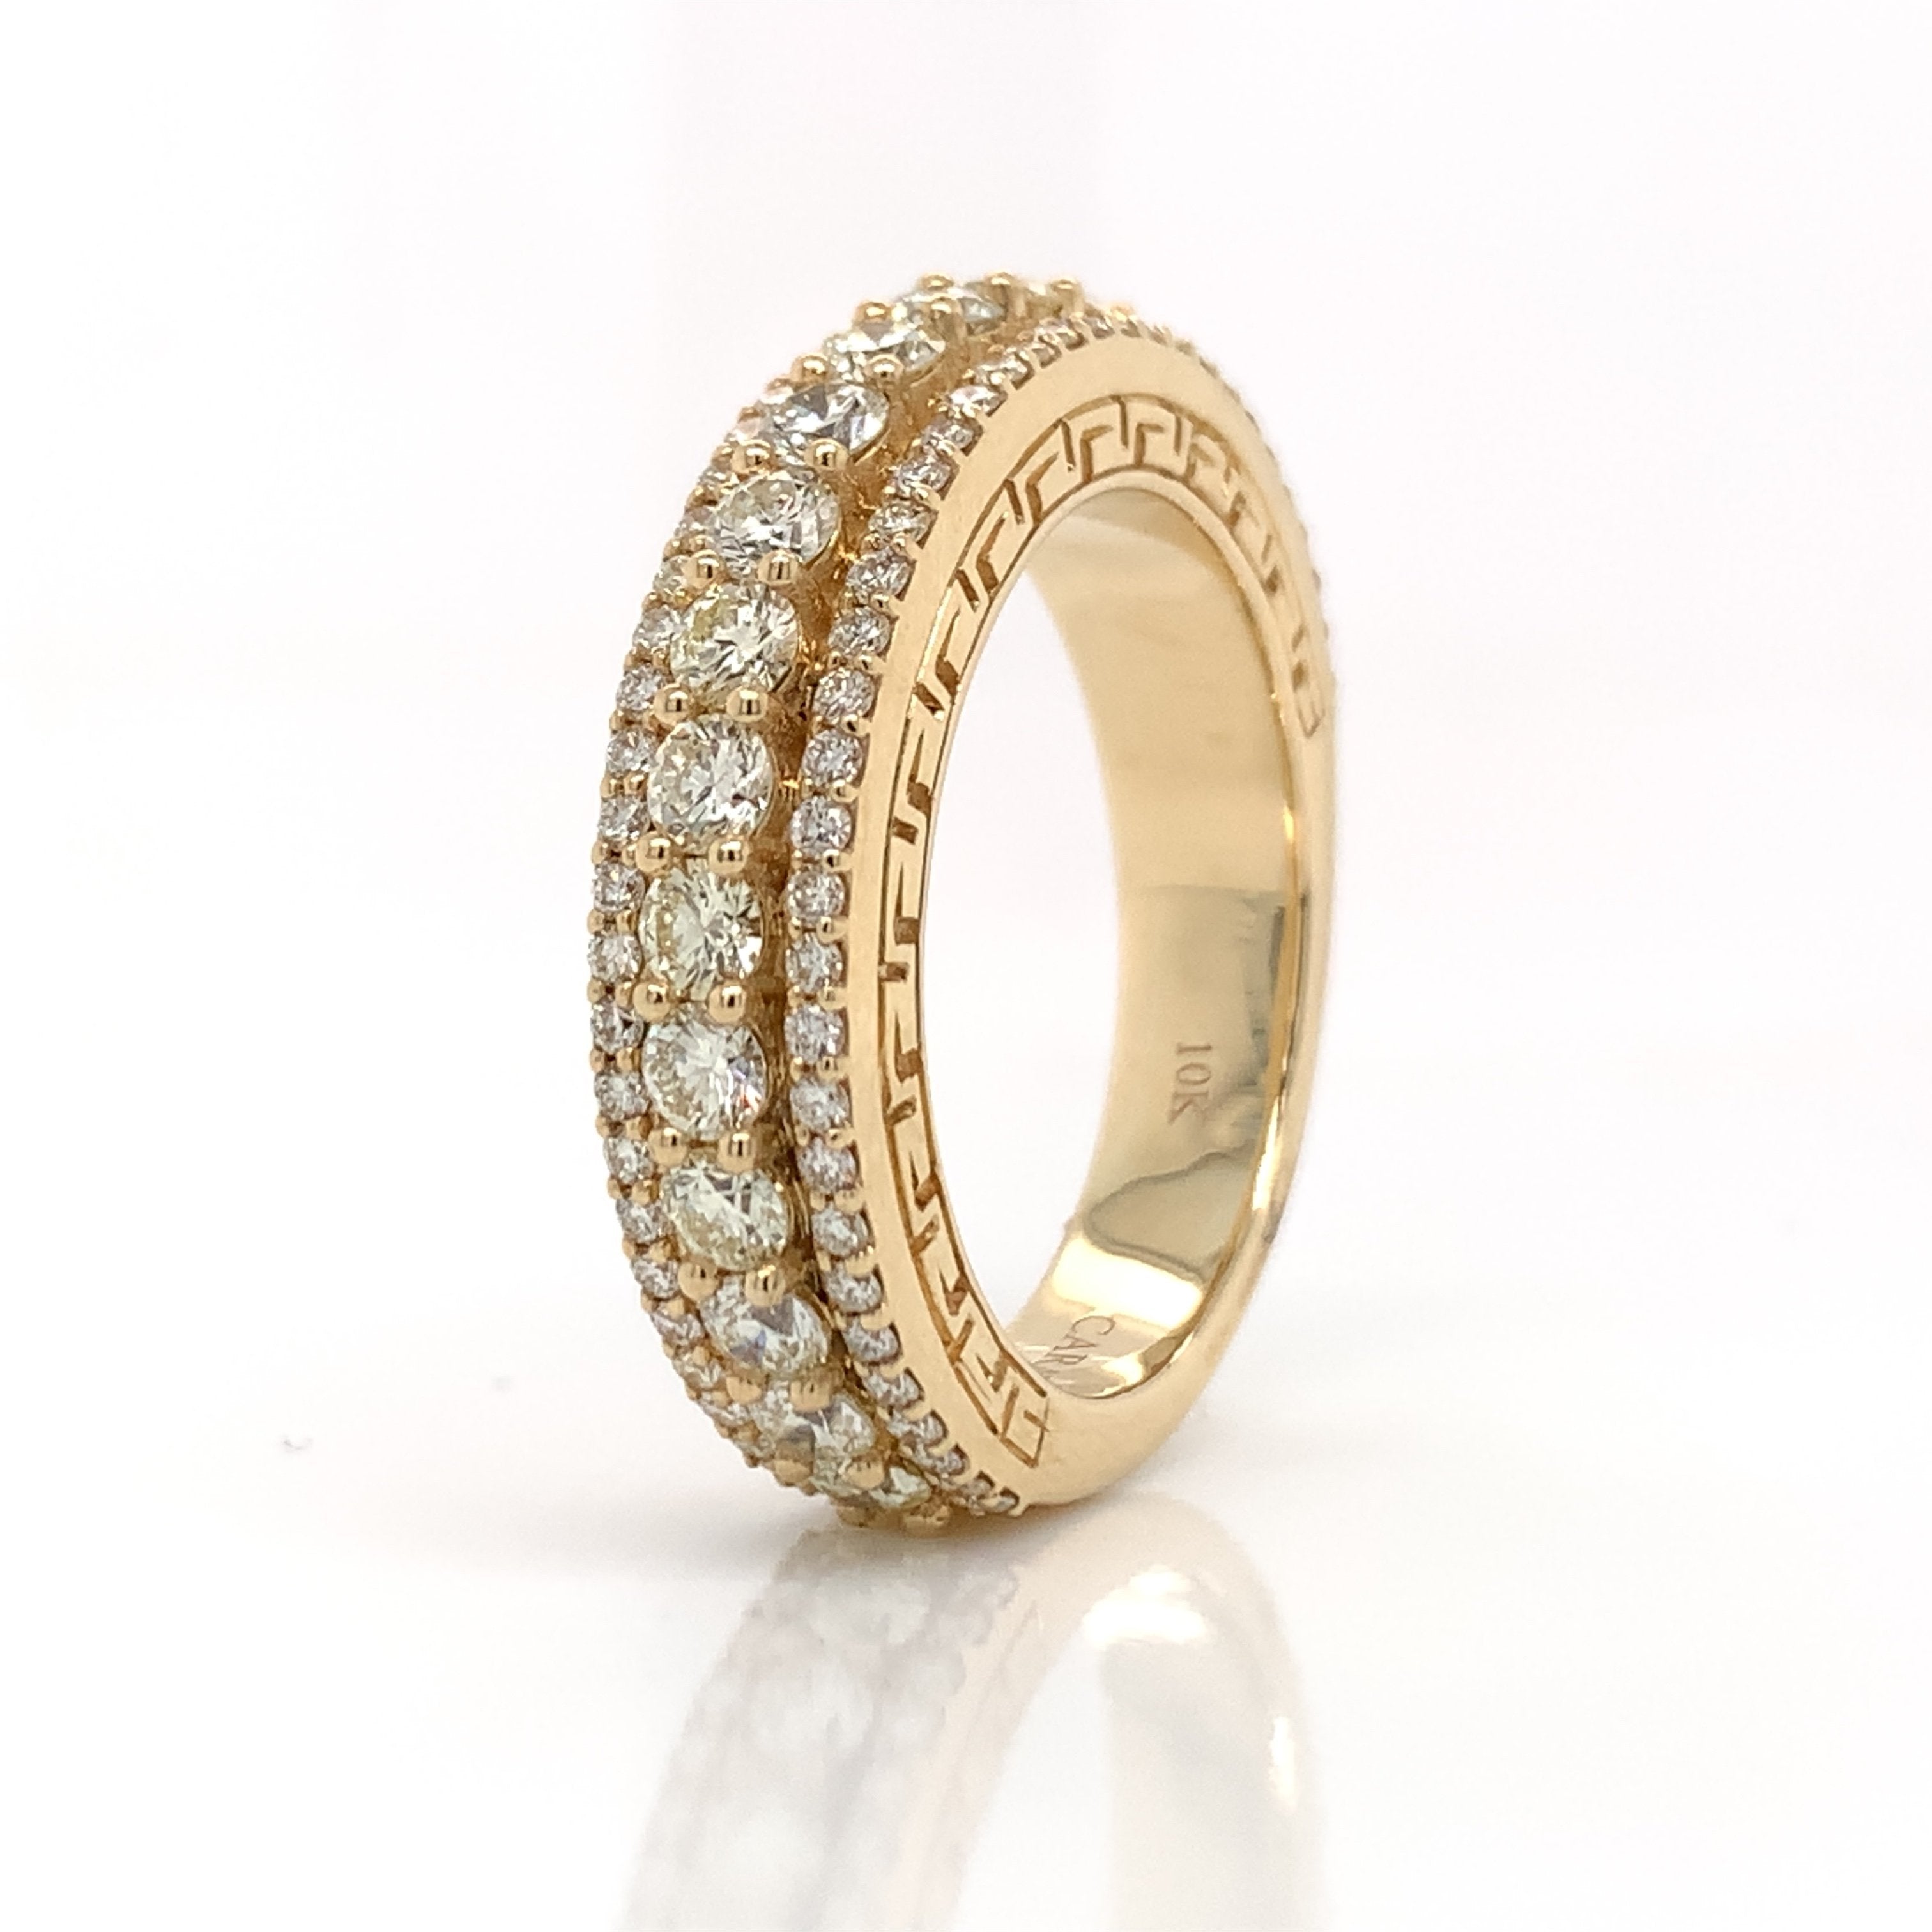 3.00 CT. Diamond Signature Ring in Gold - White Carat - USA & Canada